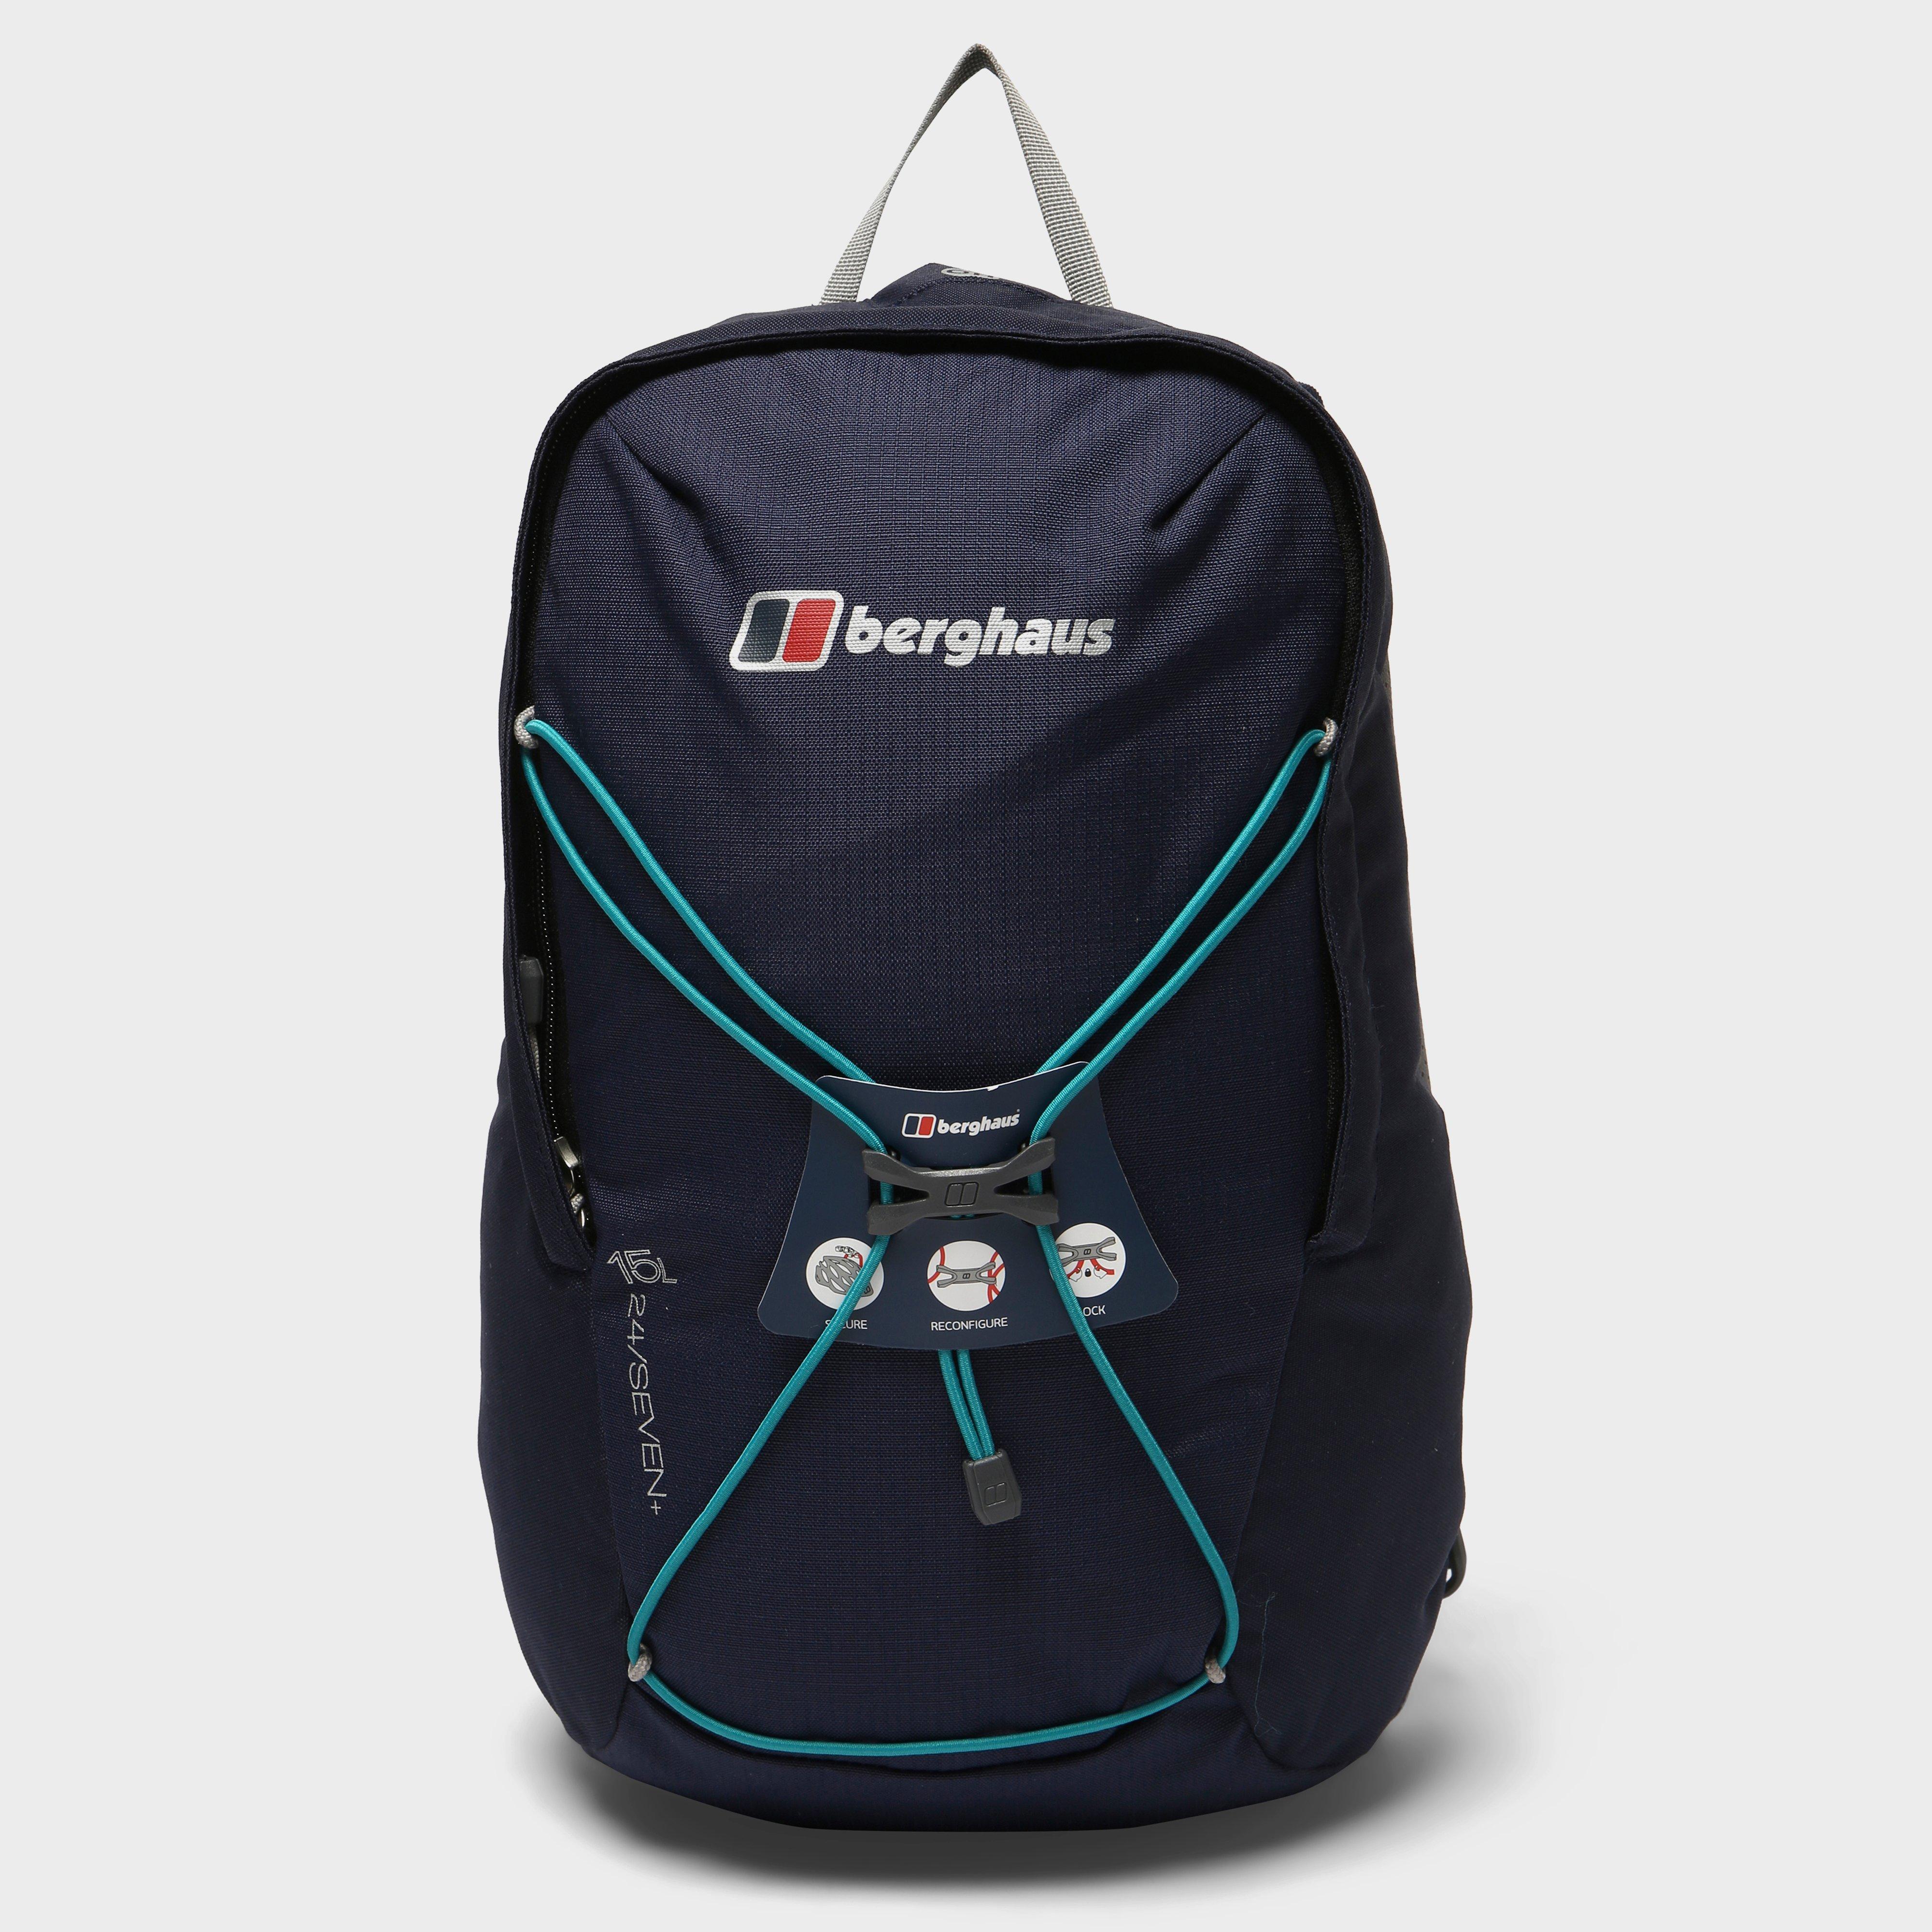 Berghaus TwentyFourSeven 15L Backpack Review